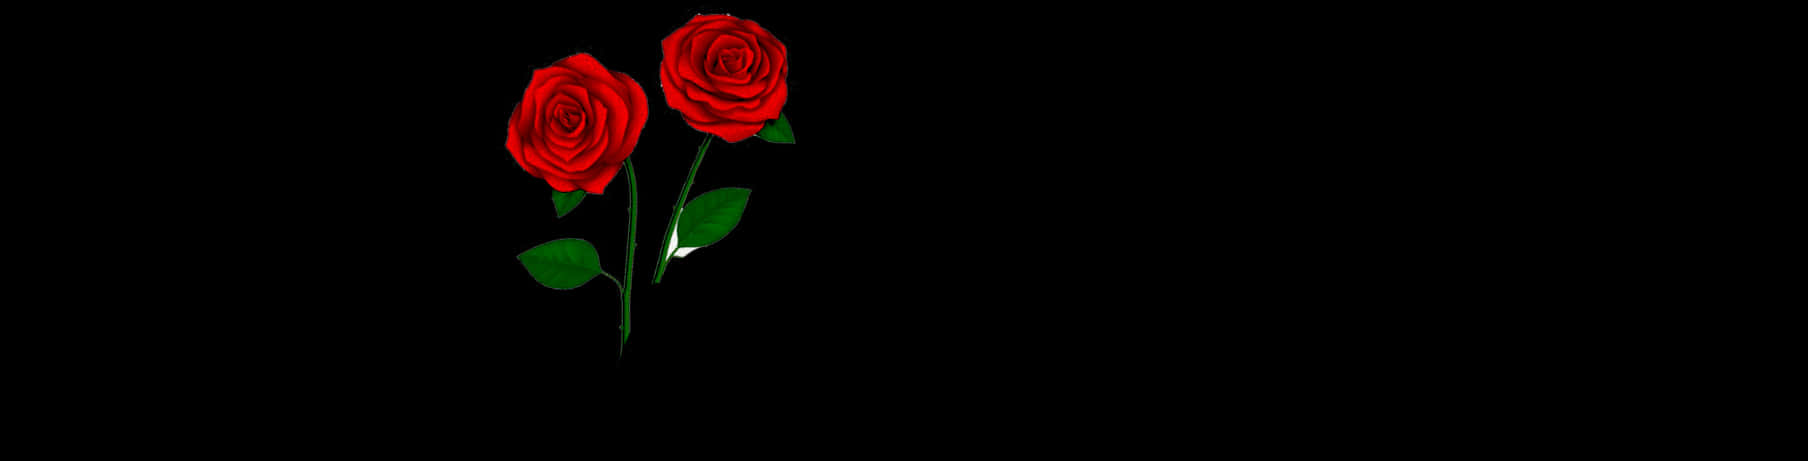 Red Roses Black Background